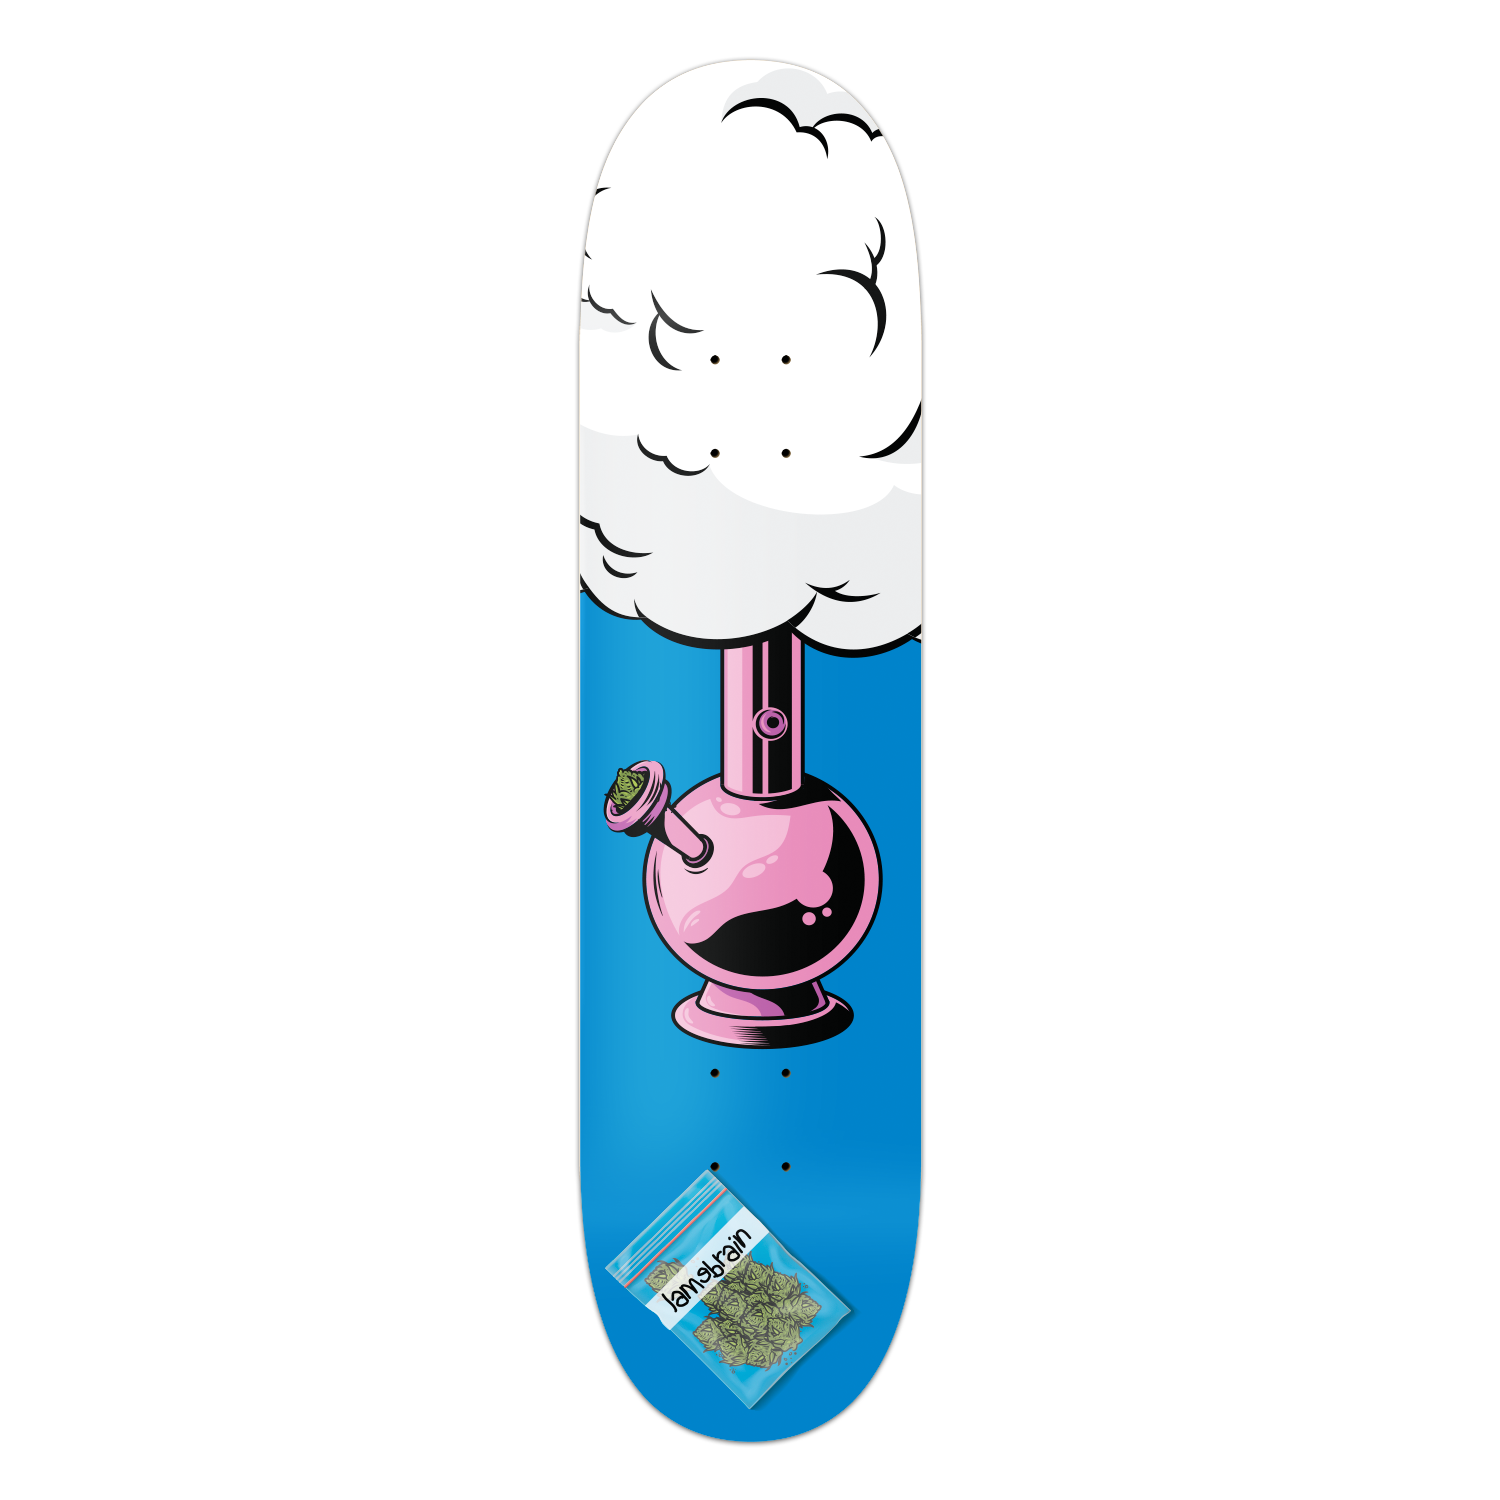 skateboard with bong and smoke cloud. bag of marijuana is labeled lamebrain.